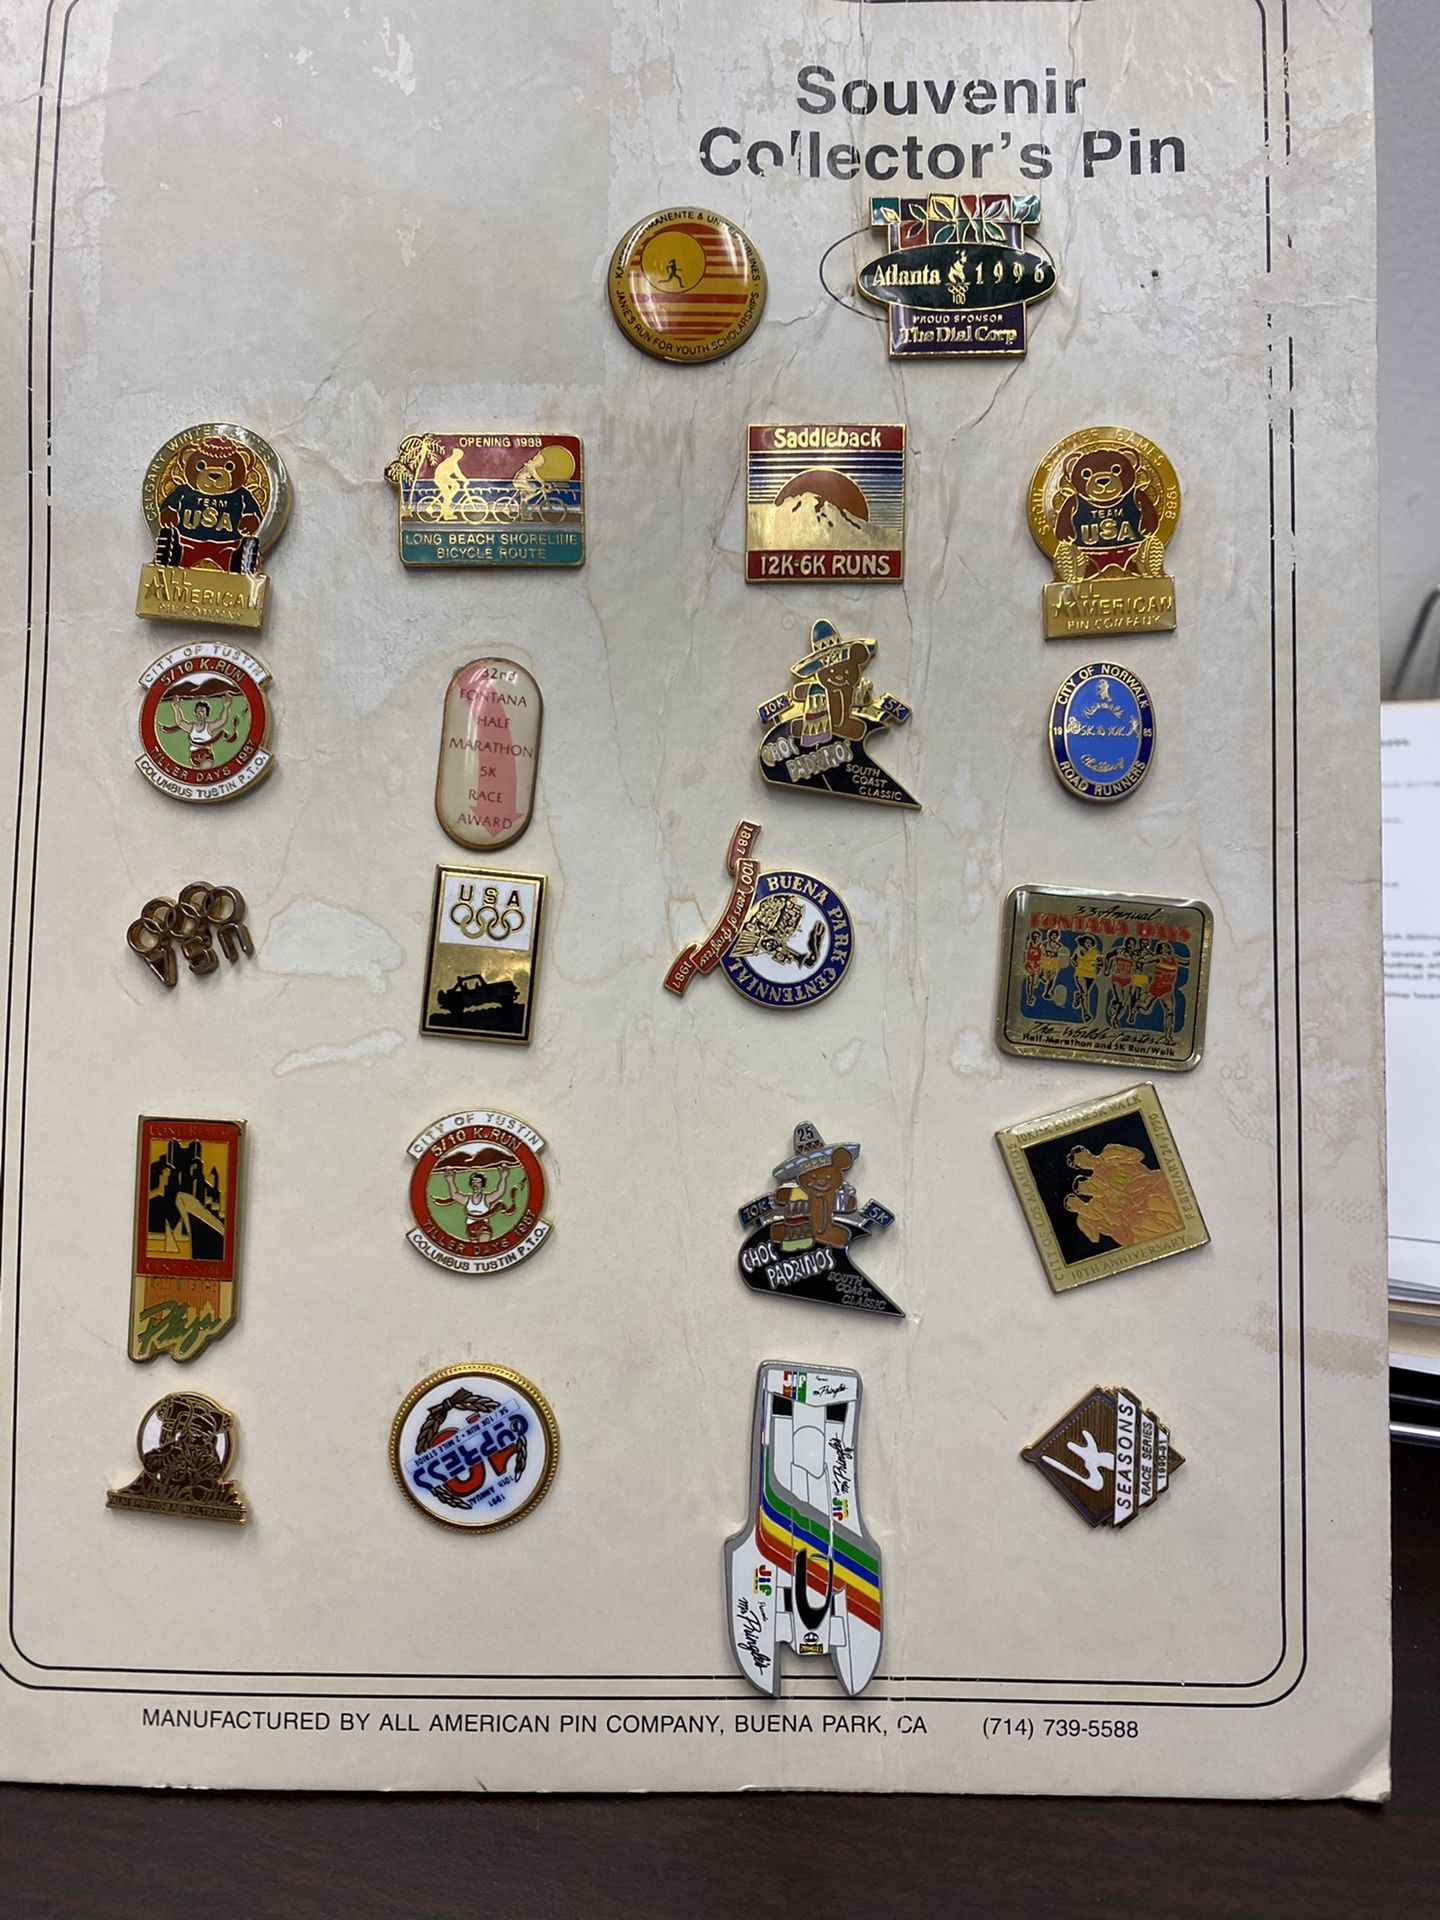 Misc Souvenir Pins on board display